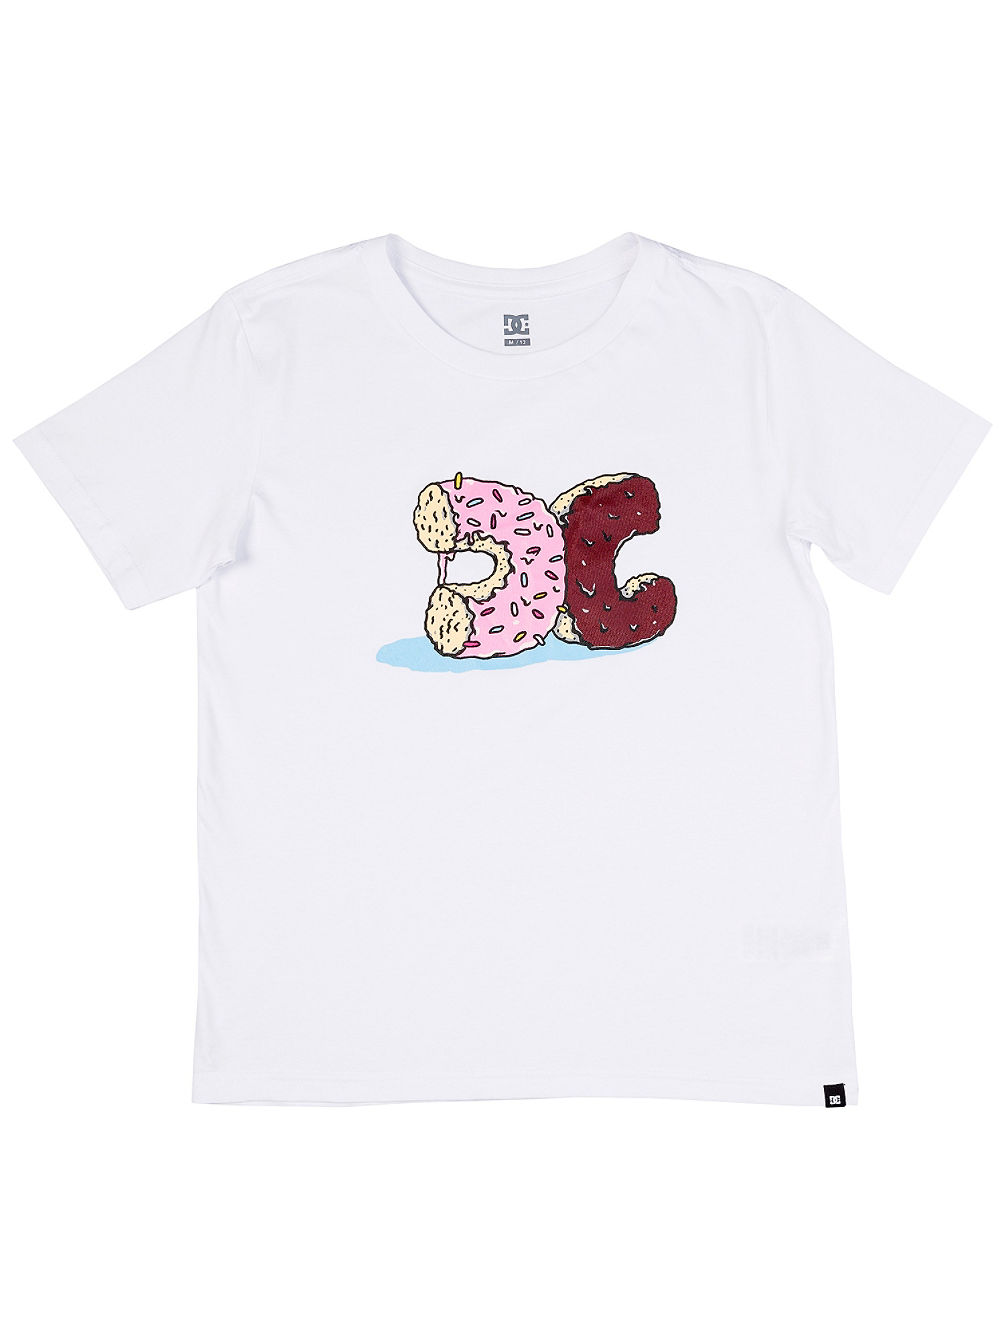 Donut Crush Camiseta